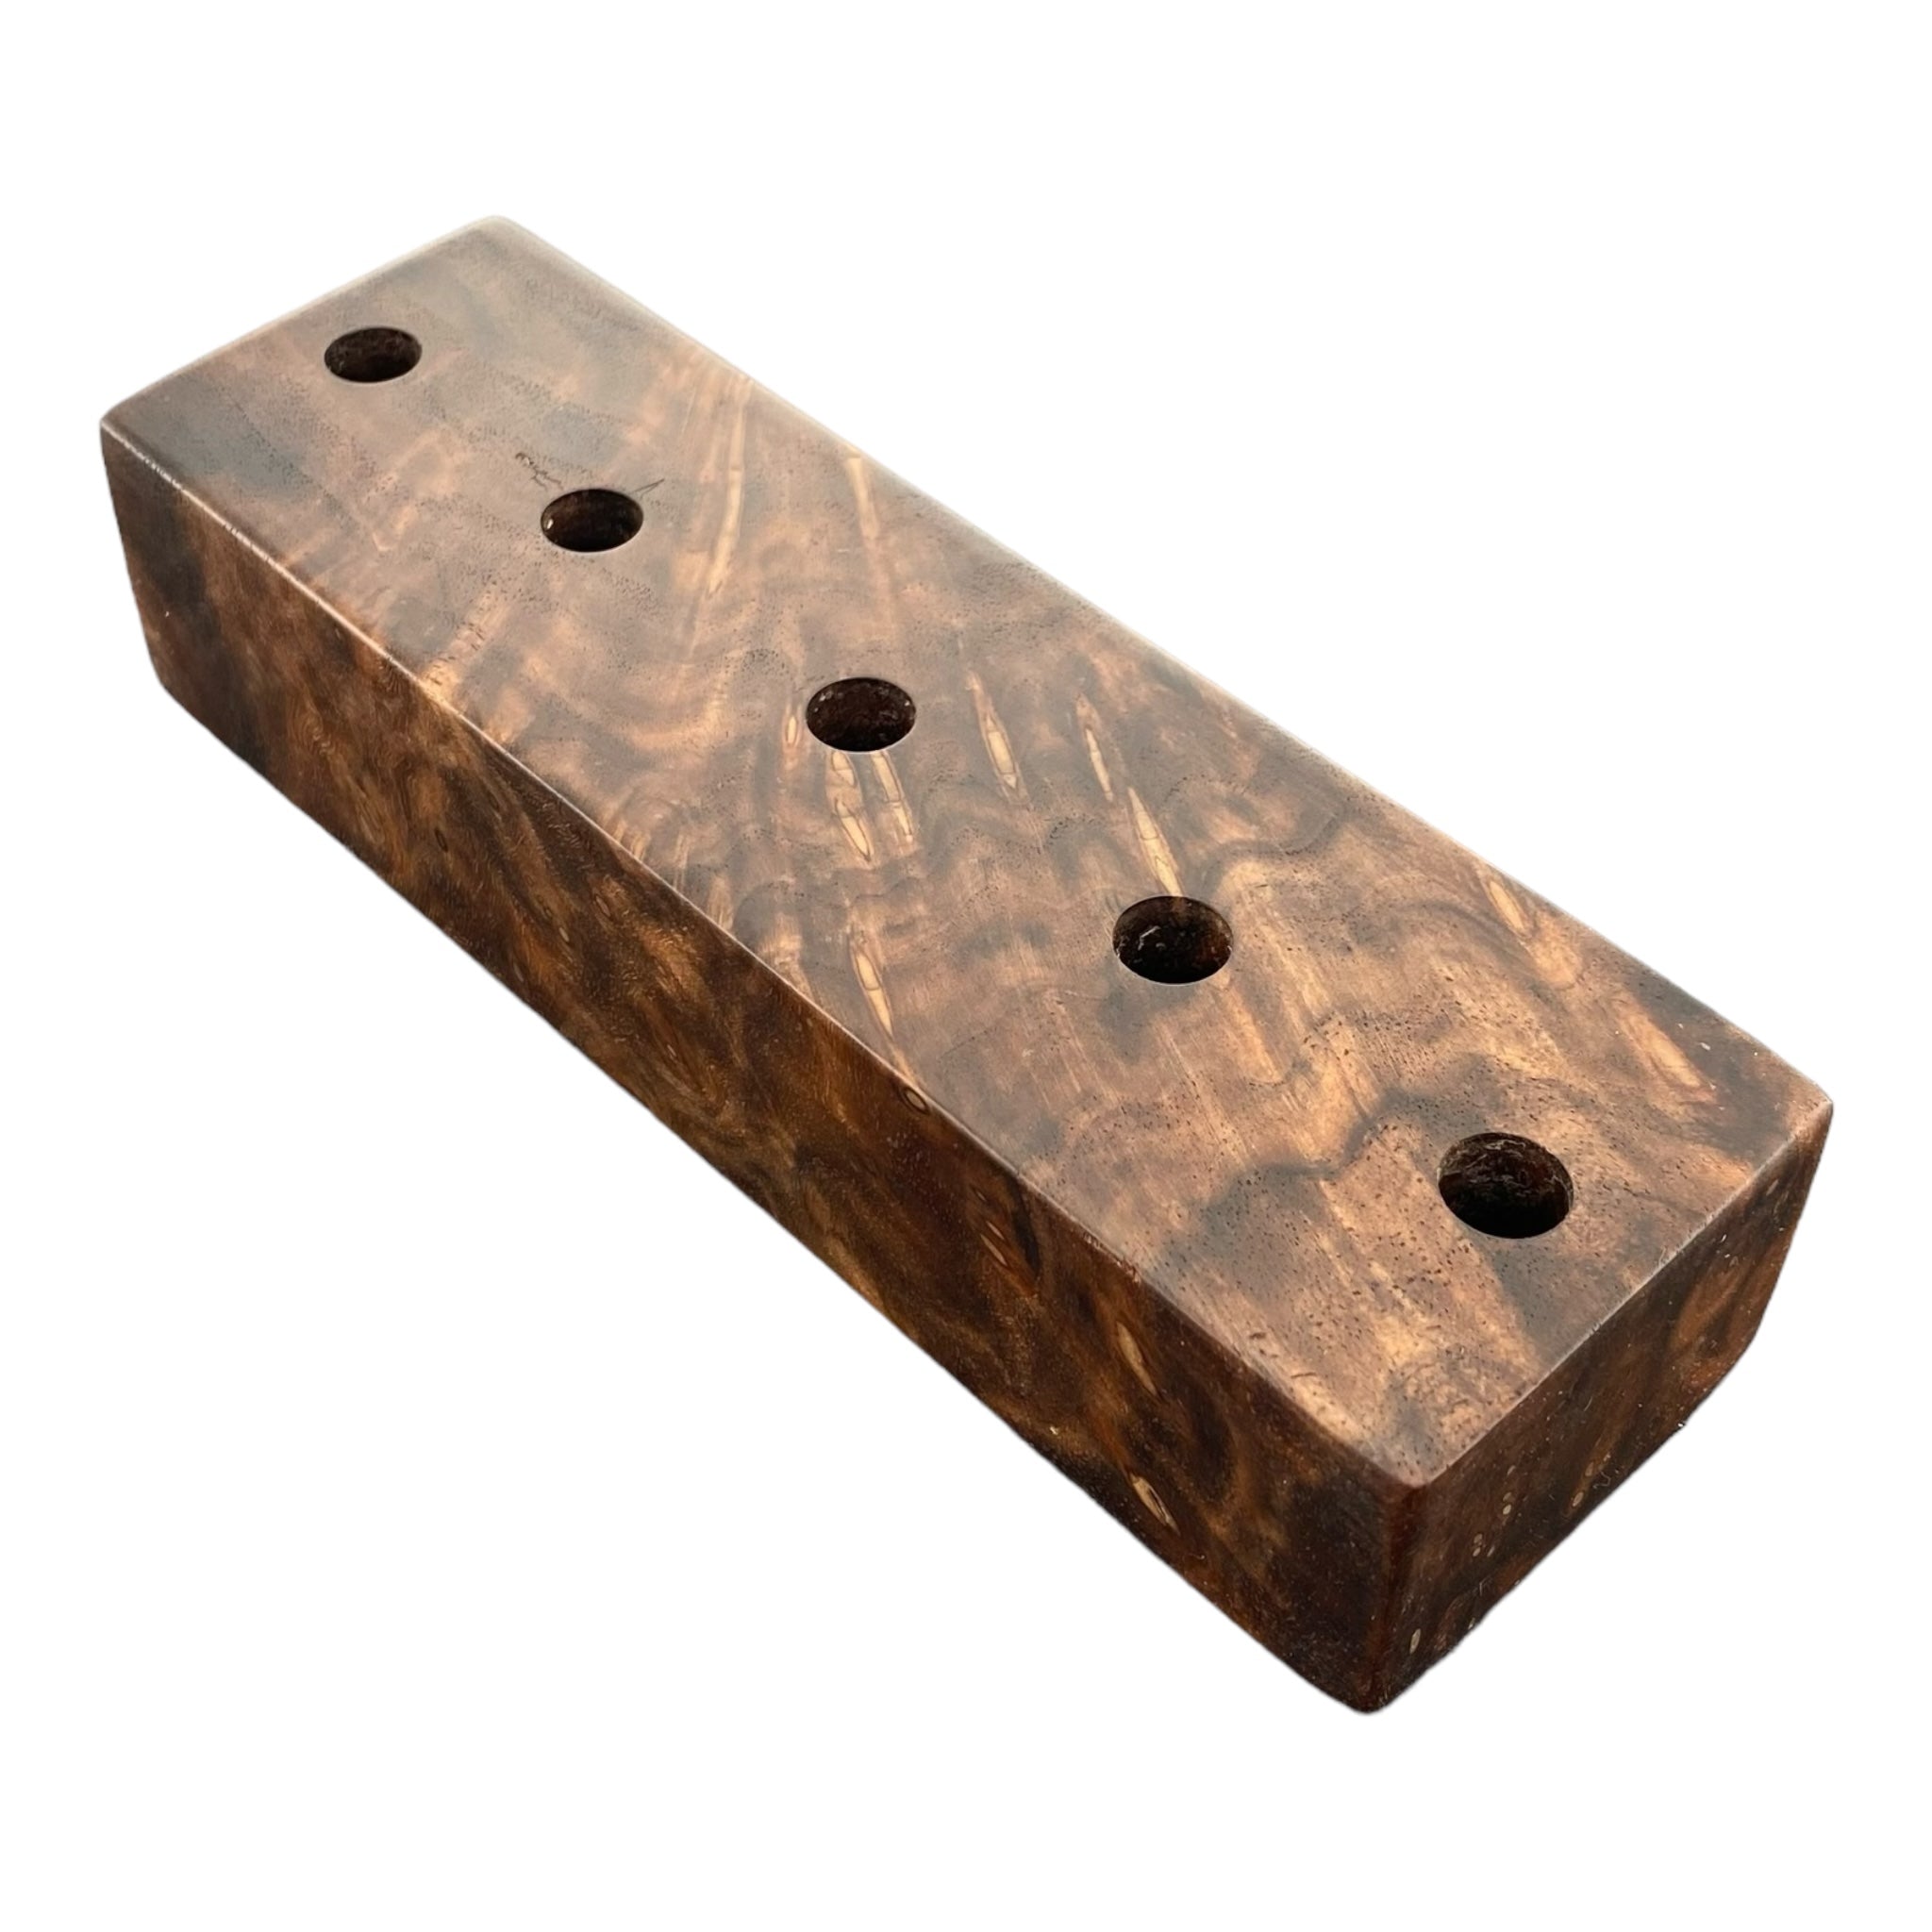 5 Hole Wood Display Stand Holder For 10mm Bong Bowl Pieces Or Quartz Bangers - Black Walnut Burl